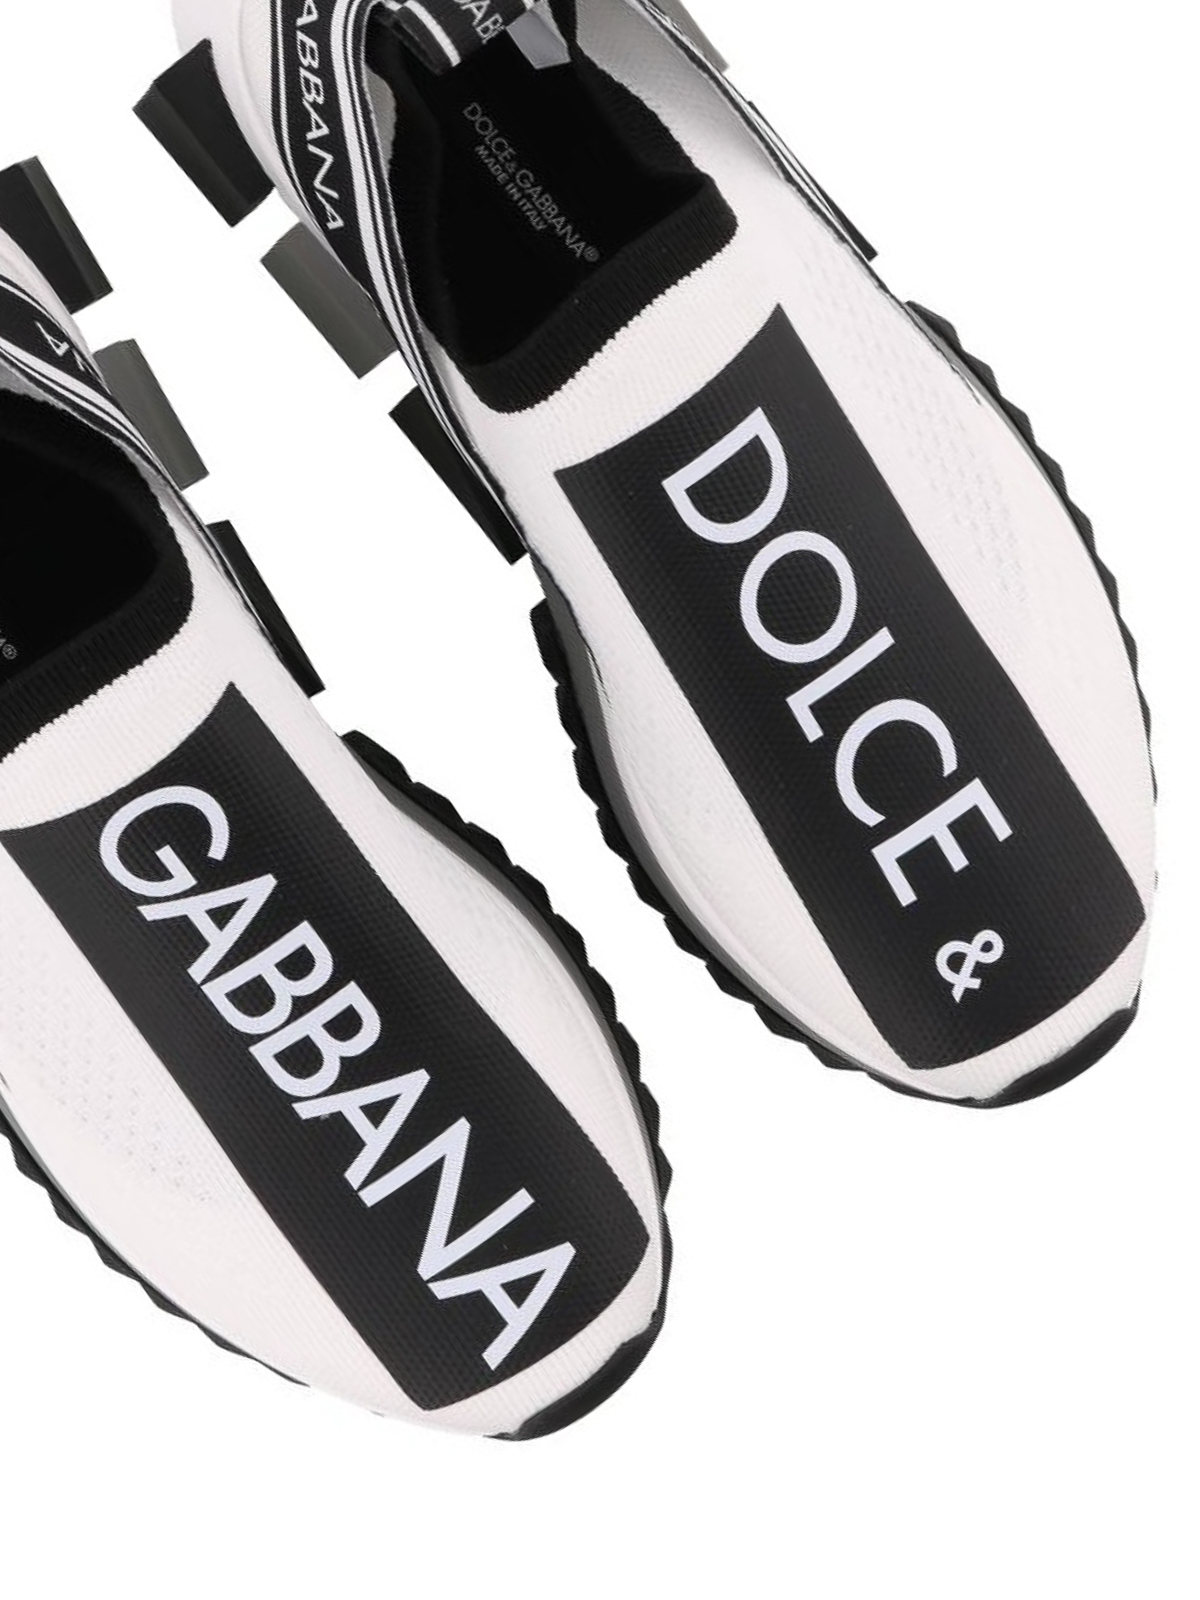 Dolce \u0026 Gabbana - Sorrento sneakers 